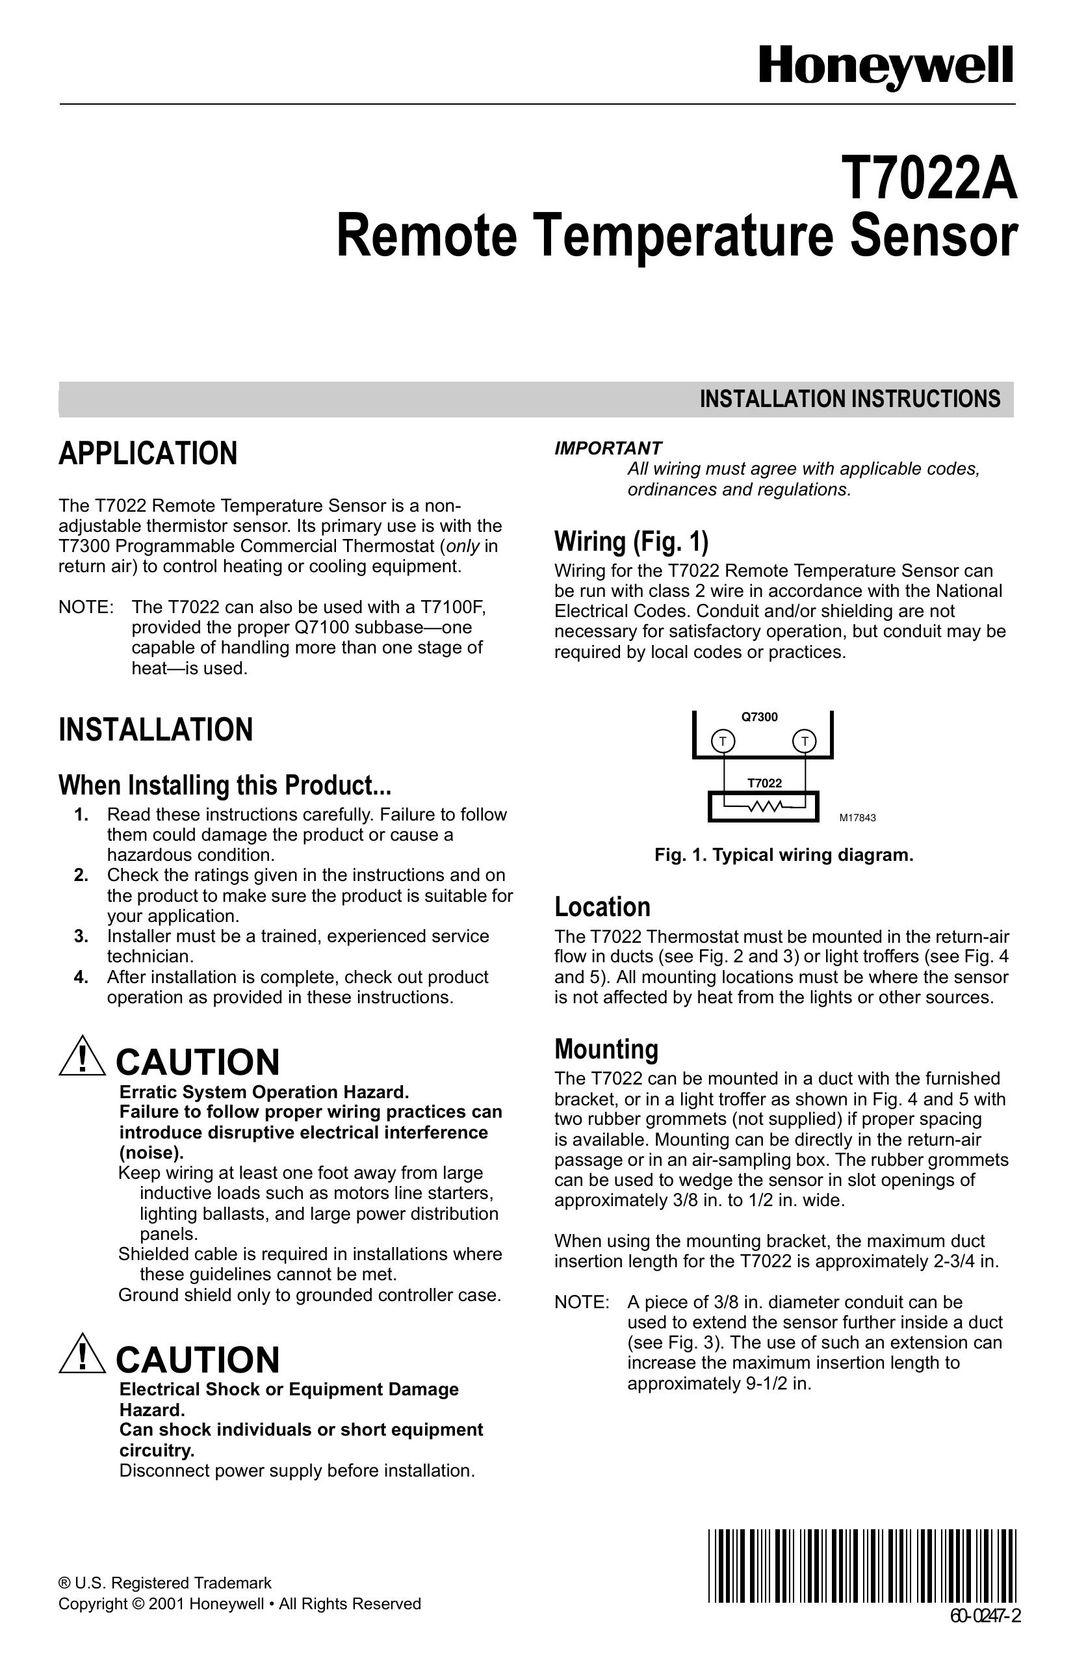 Honeywell T7022A Stud Sensor User Manual